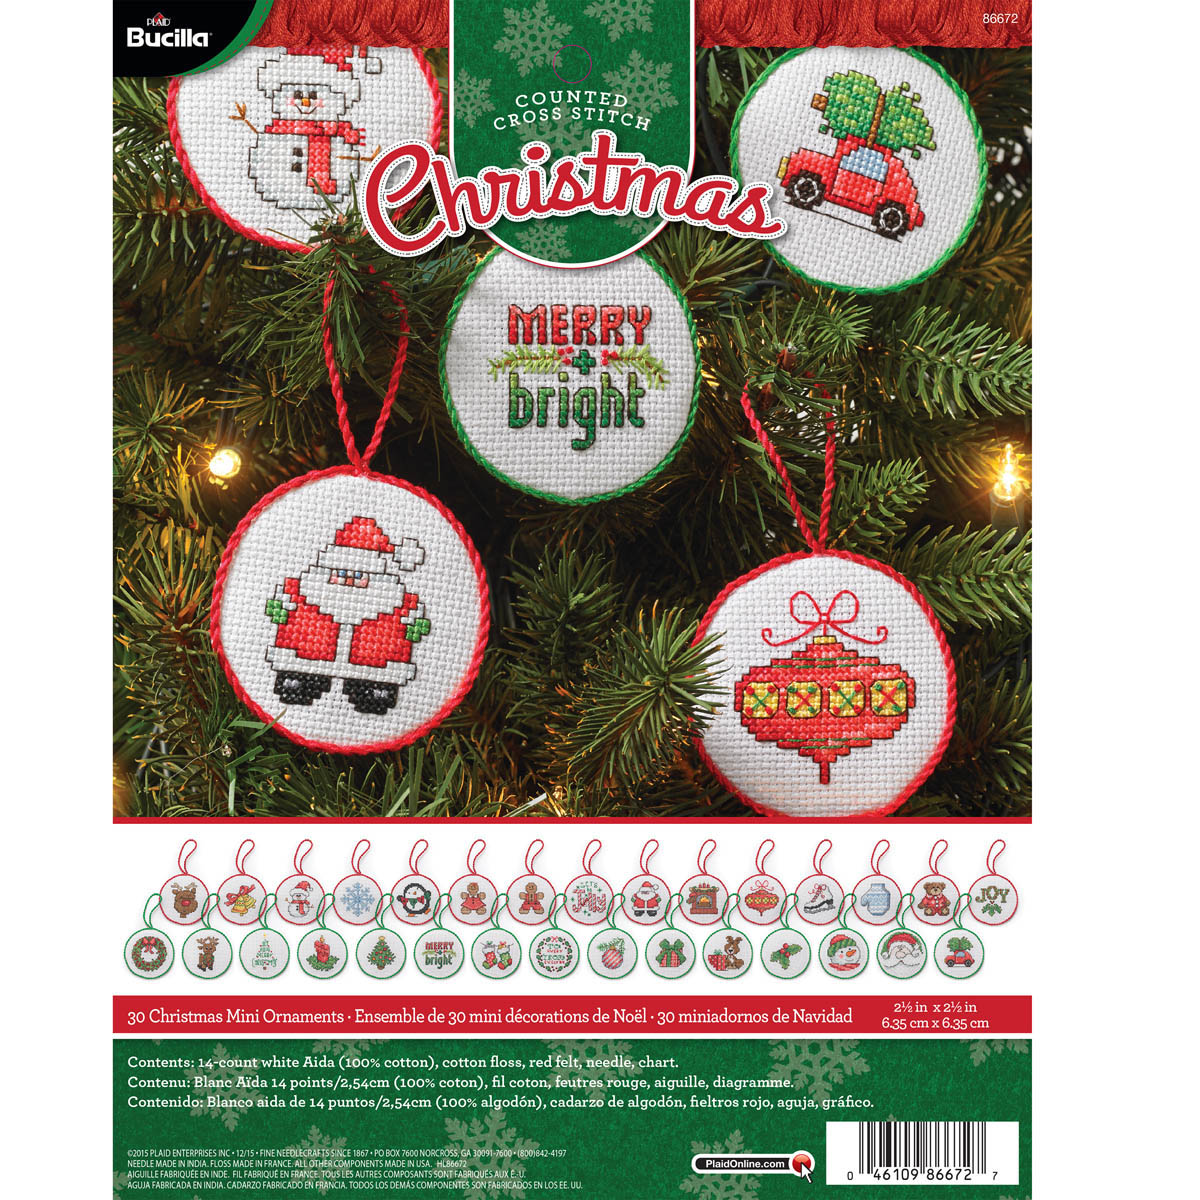 Bucilla ® Seasonal - Counted Cross Stitch - Ornament Kits - Christmas Minis - 86672